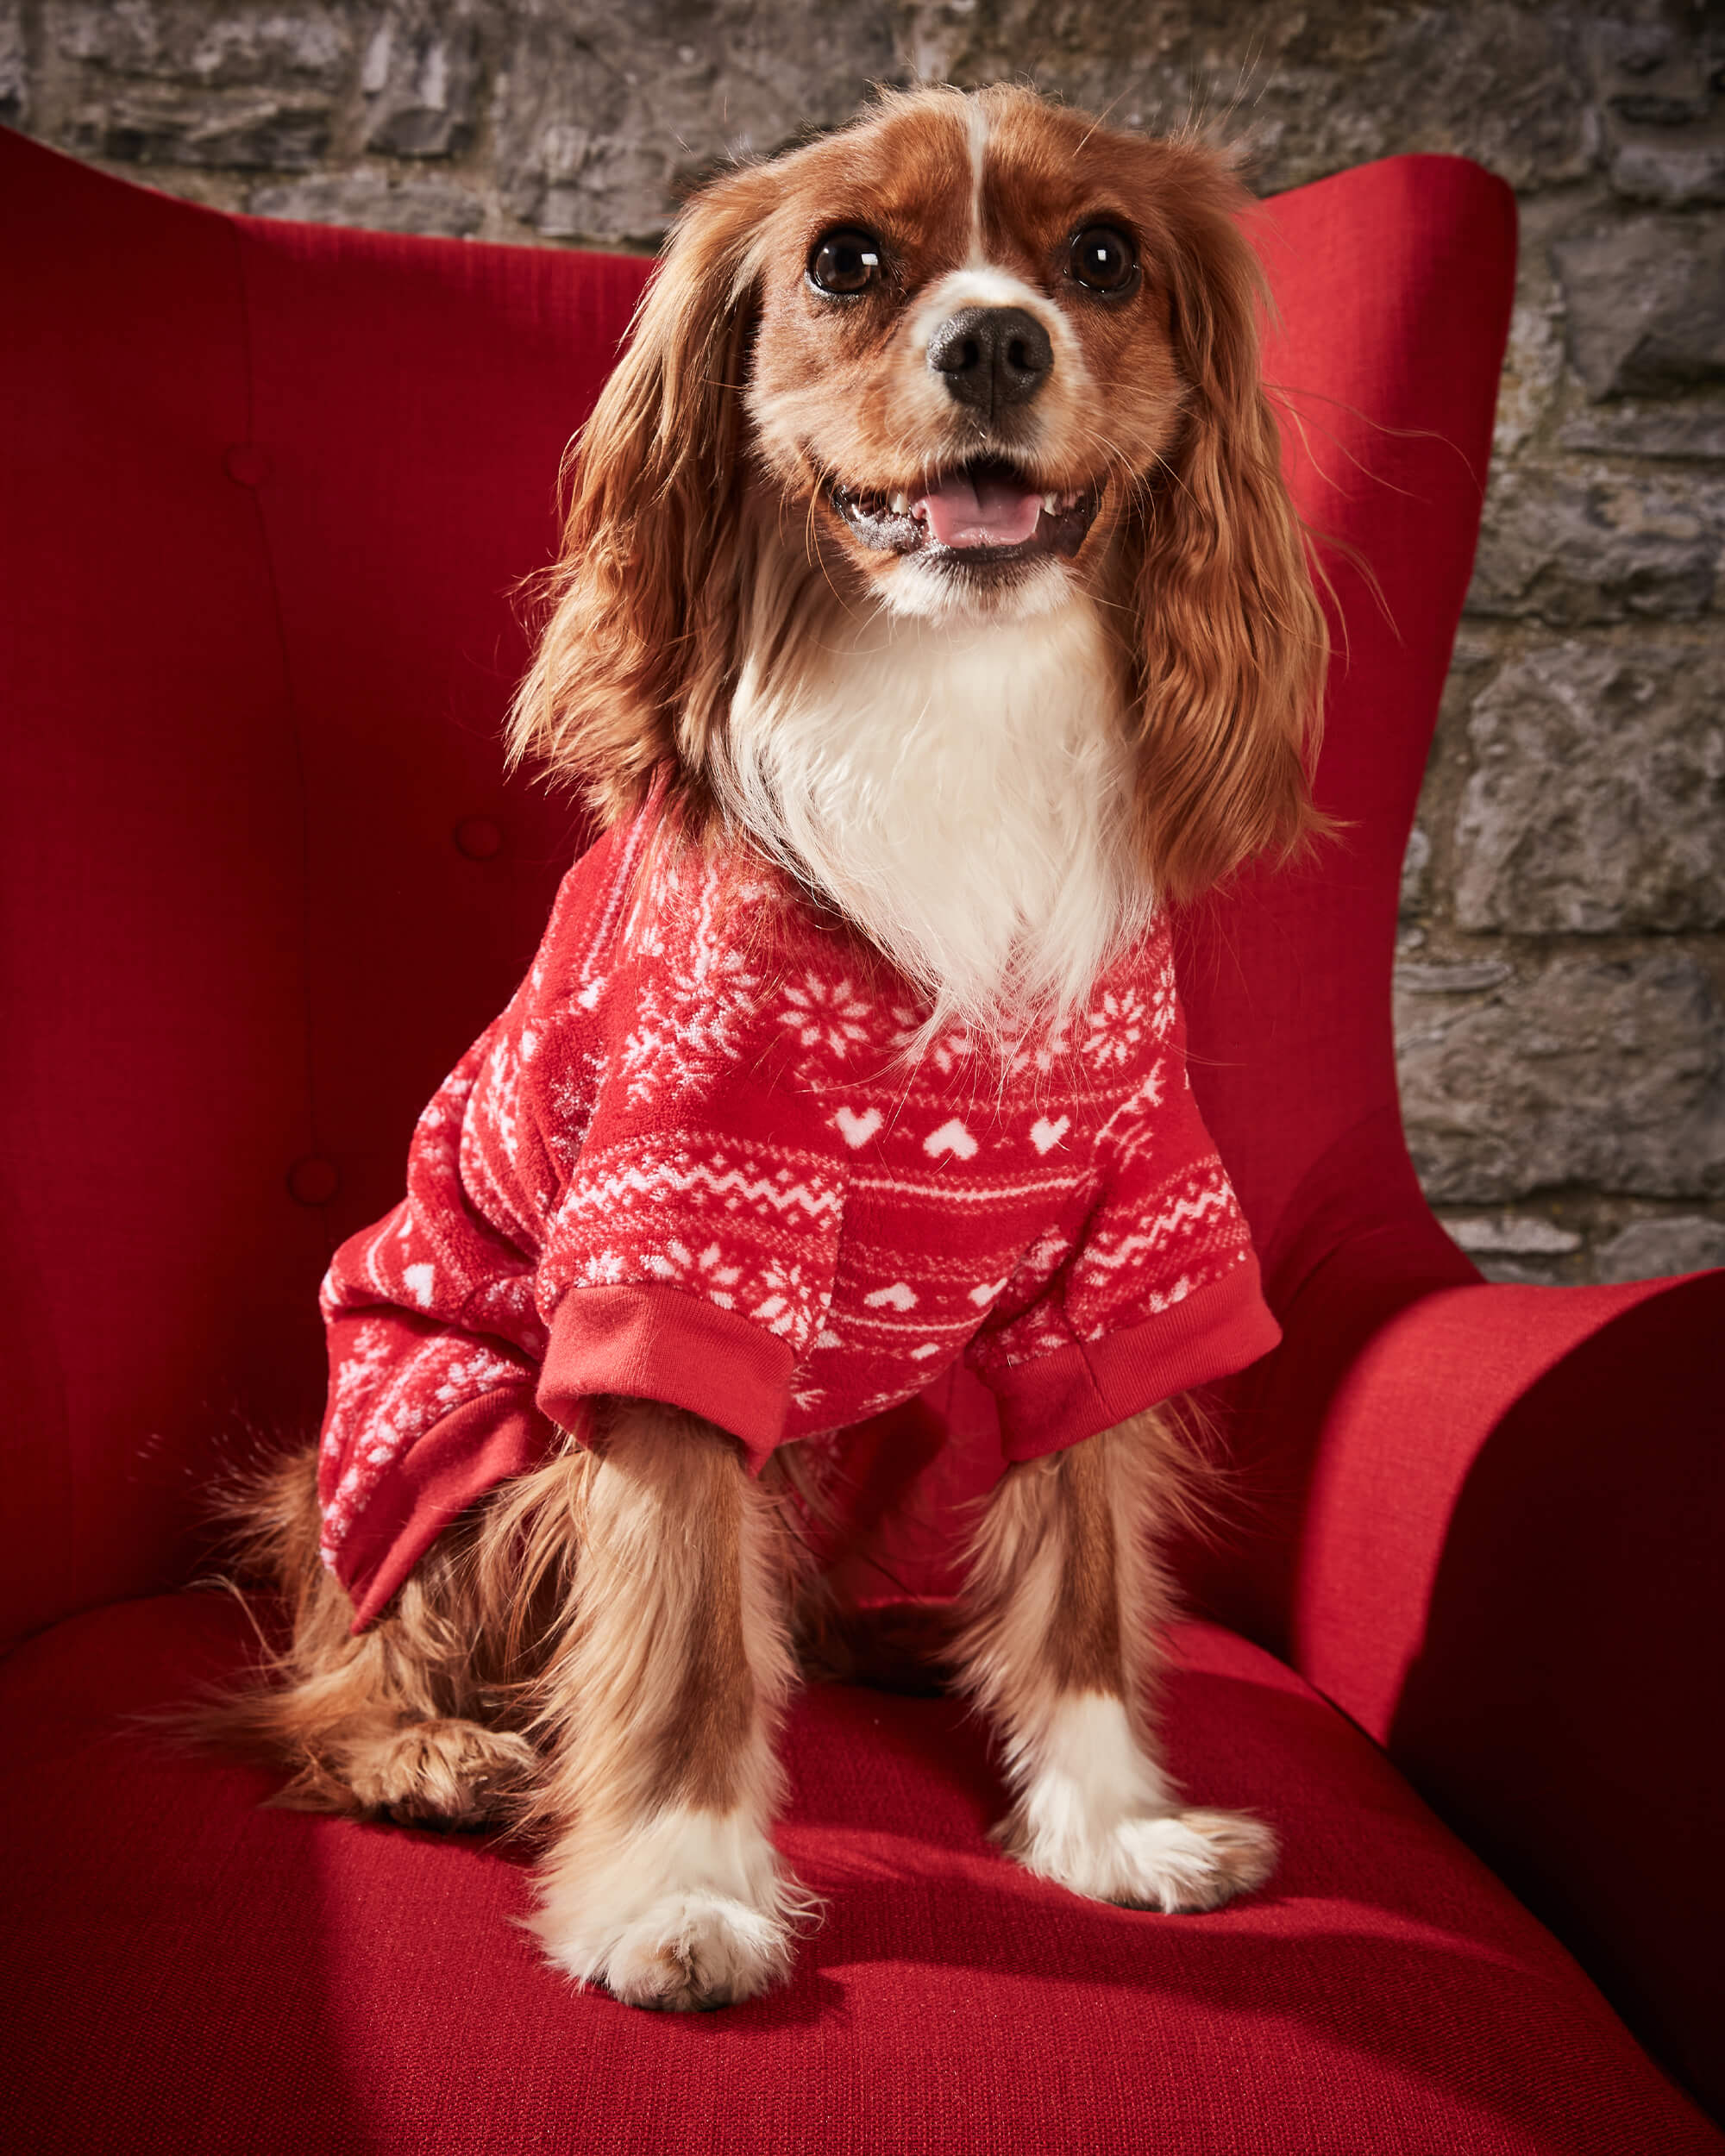 Dog weraing festive red onsie. Sitting in chair